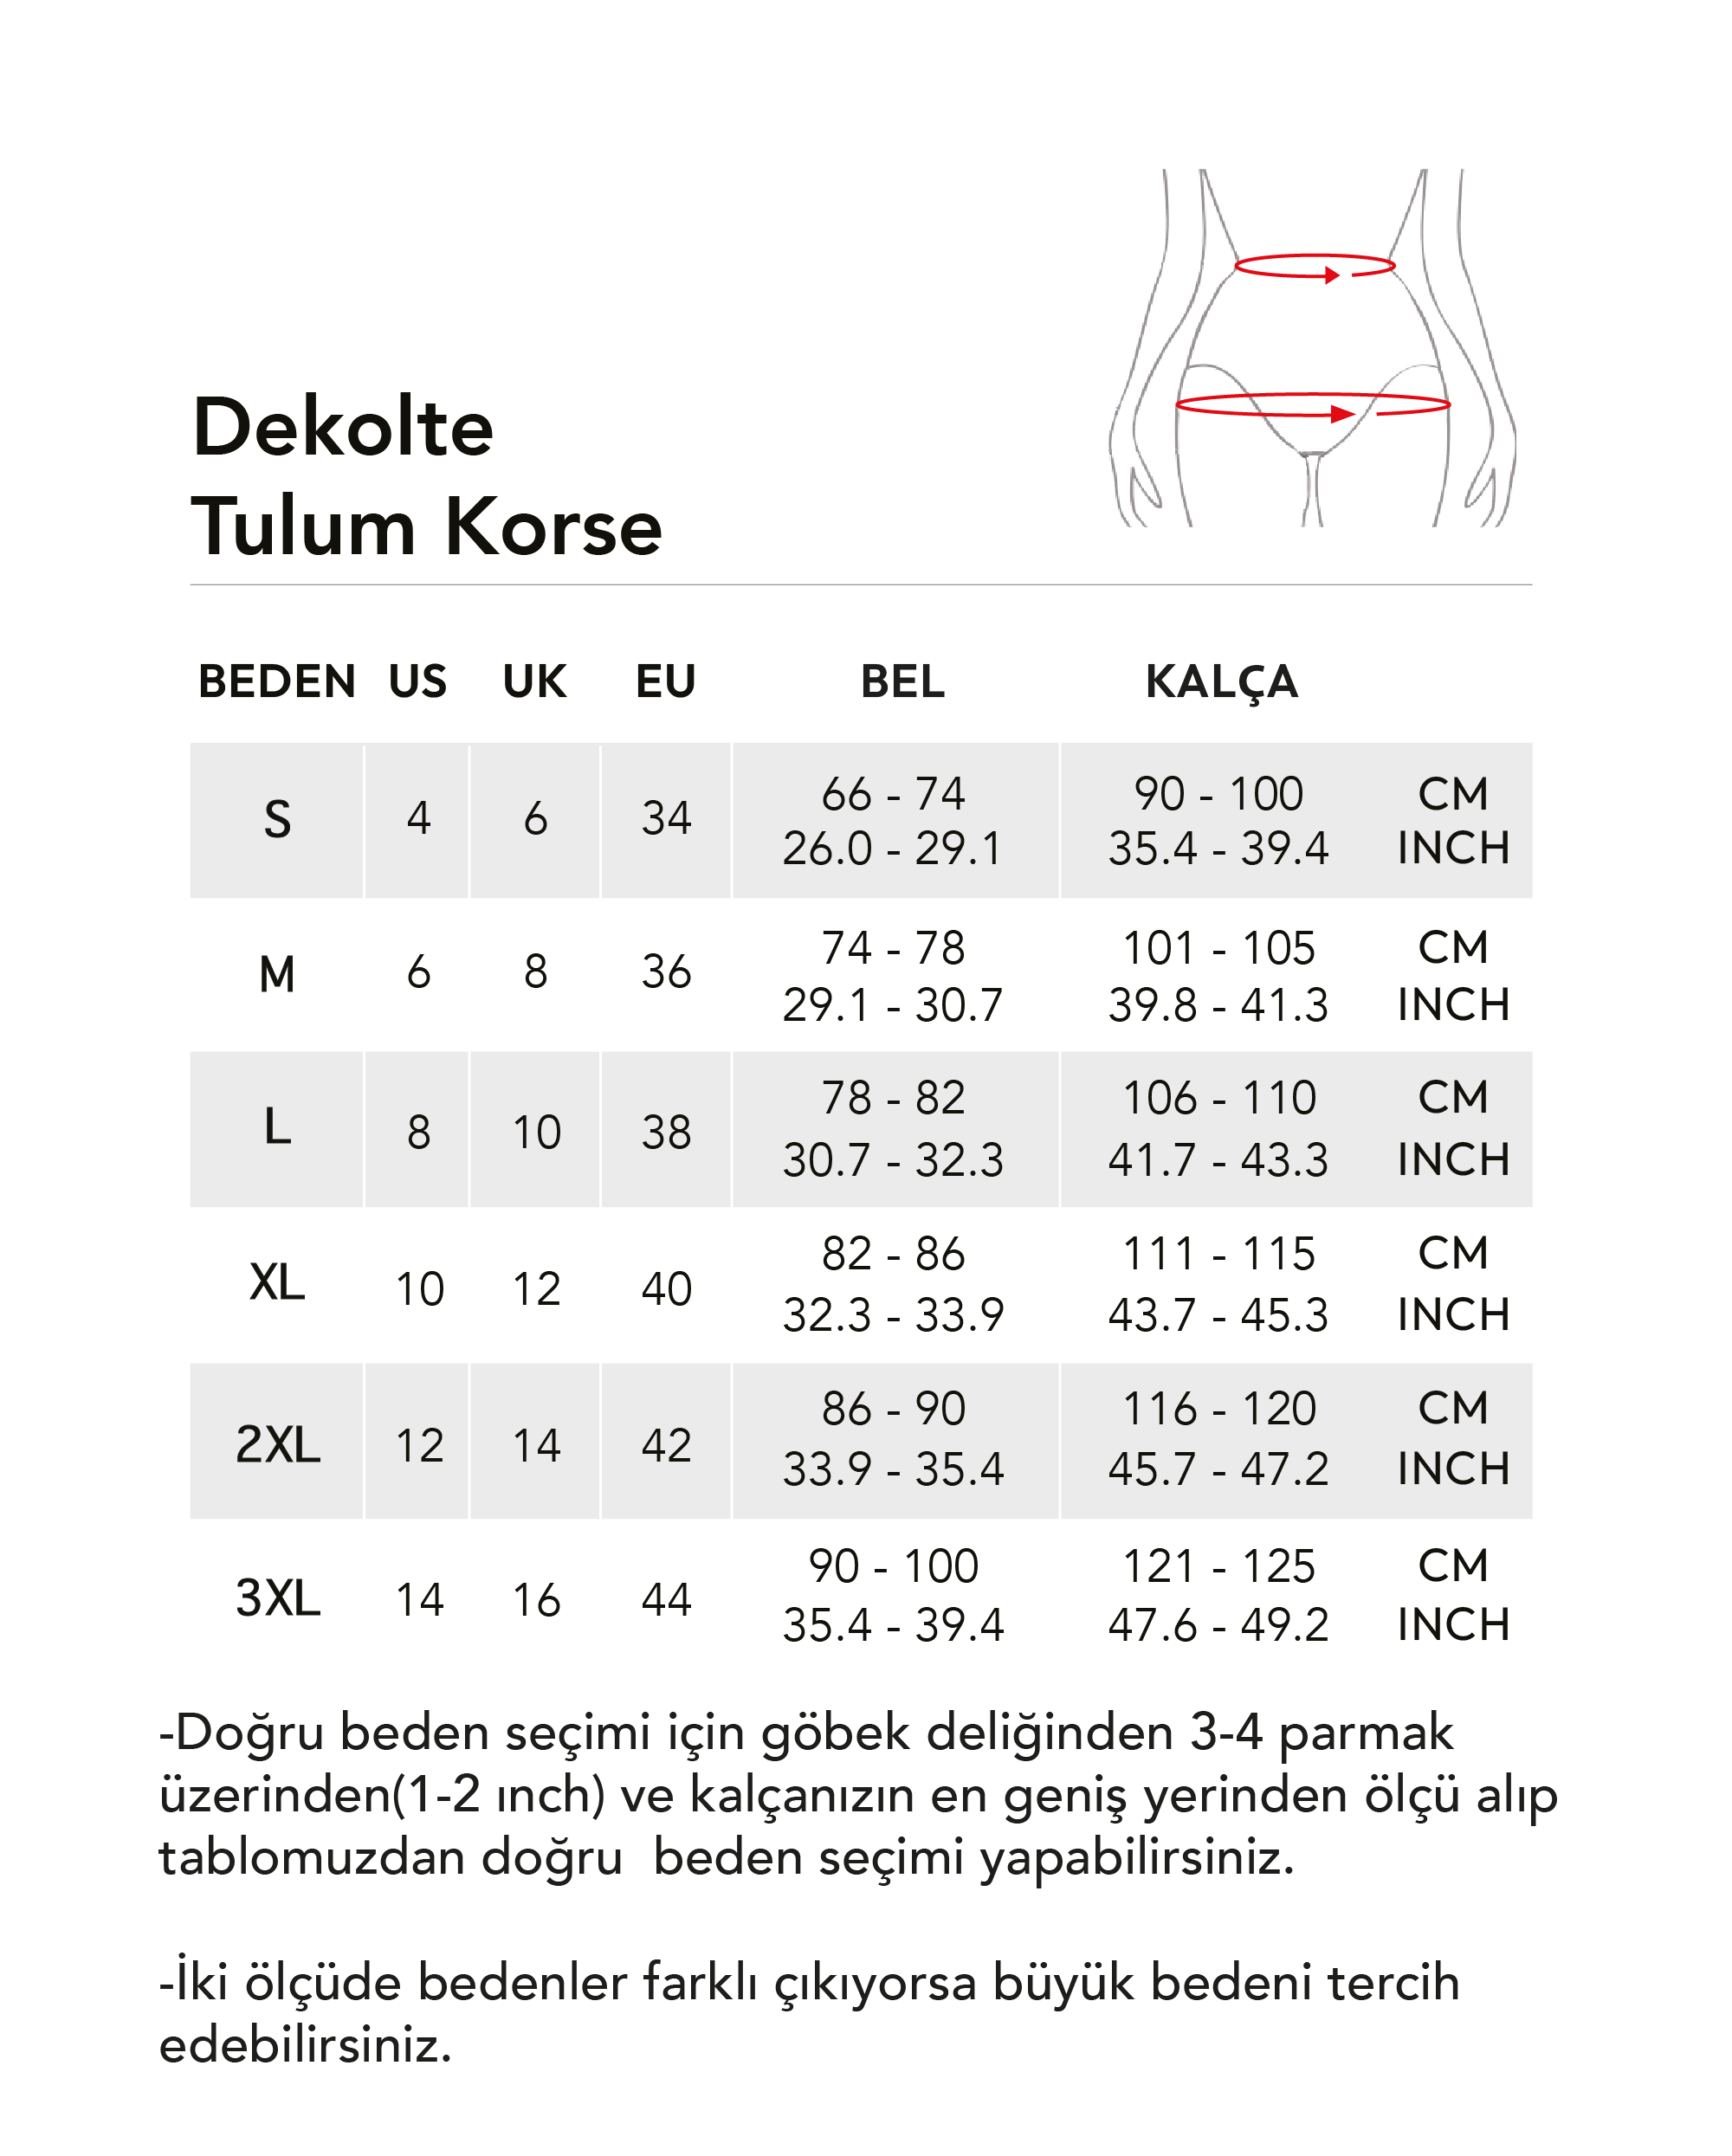 yamunakorse-dekolte-tulum-korse-7.png (201 KB)